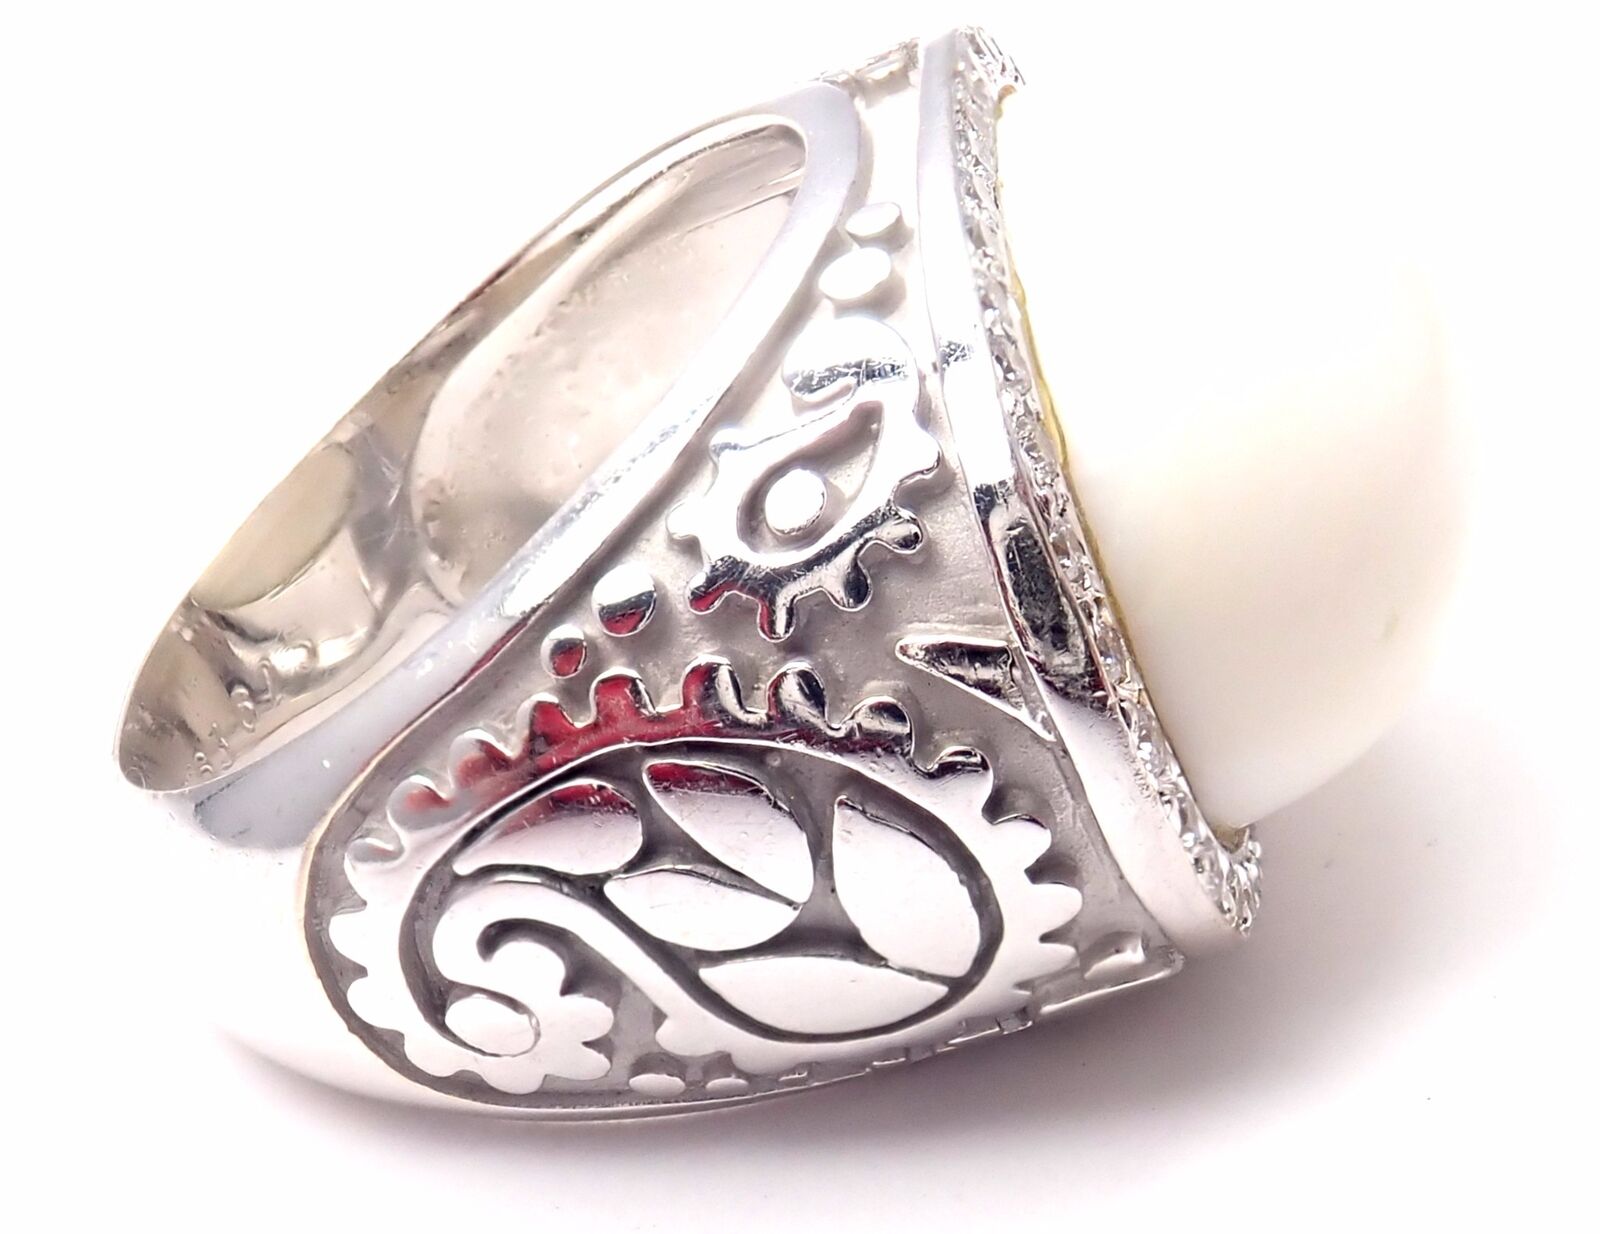 Carrera Y Carrera Jewelry & Watches:Fine Jewelry:Rings Authentic! Carrera Y Carrera Aqua 18k White Gold Diamond White Agate Ring